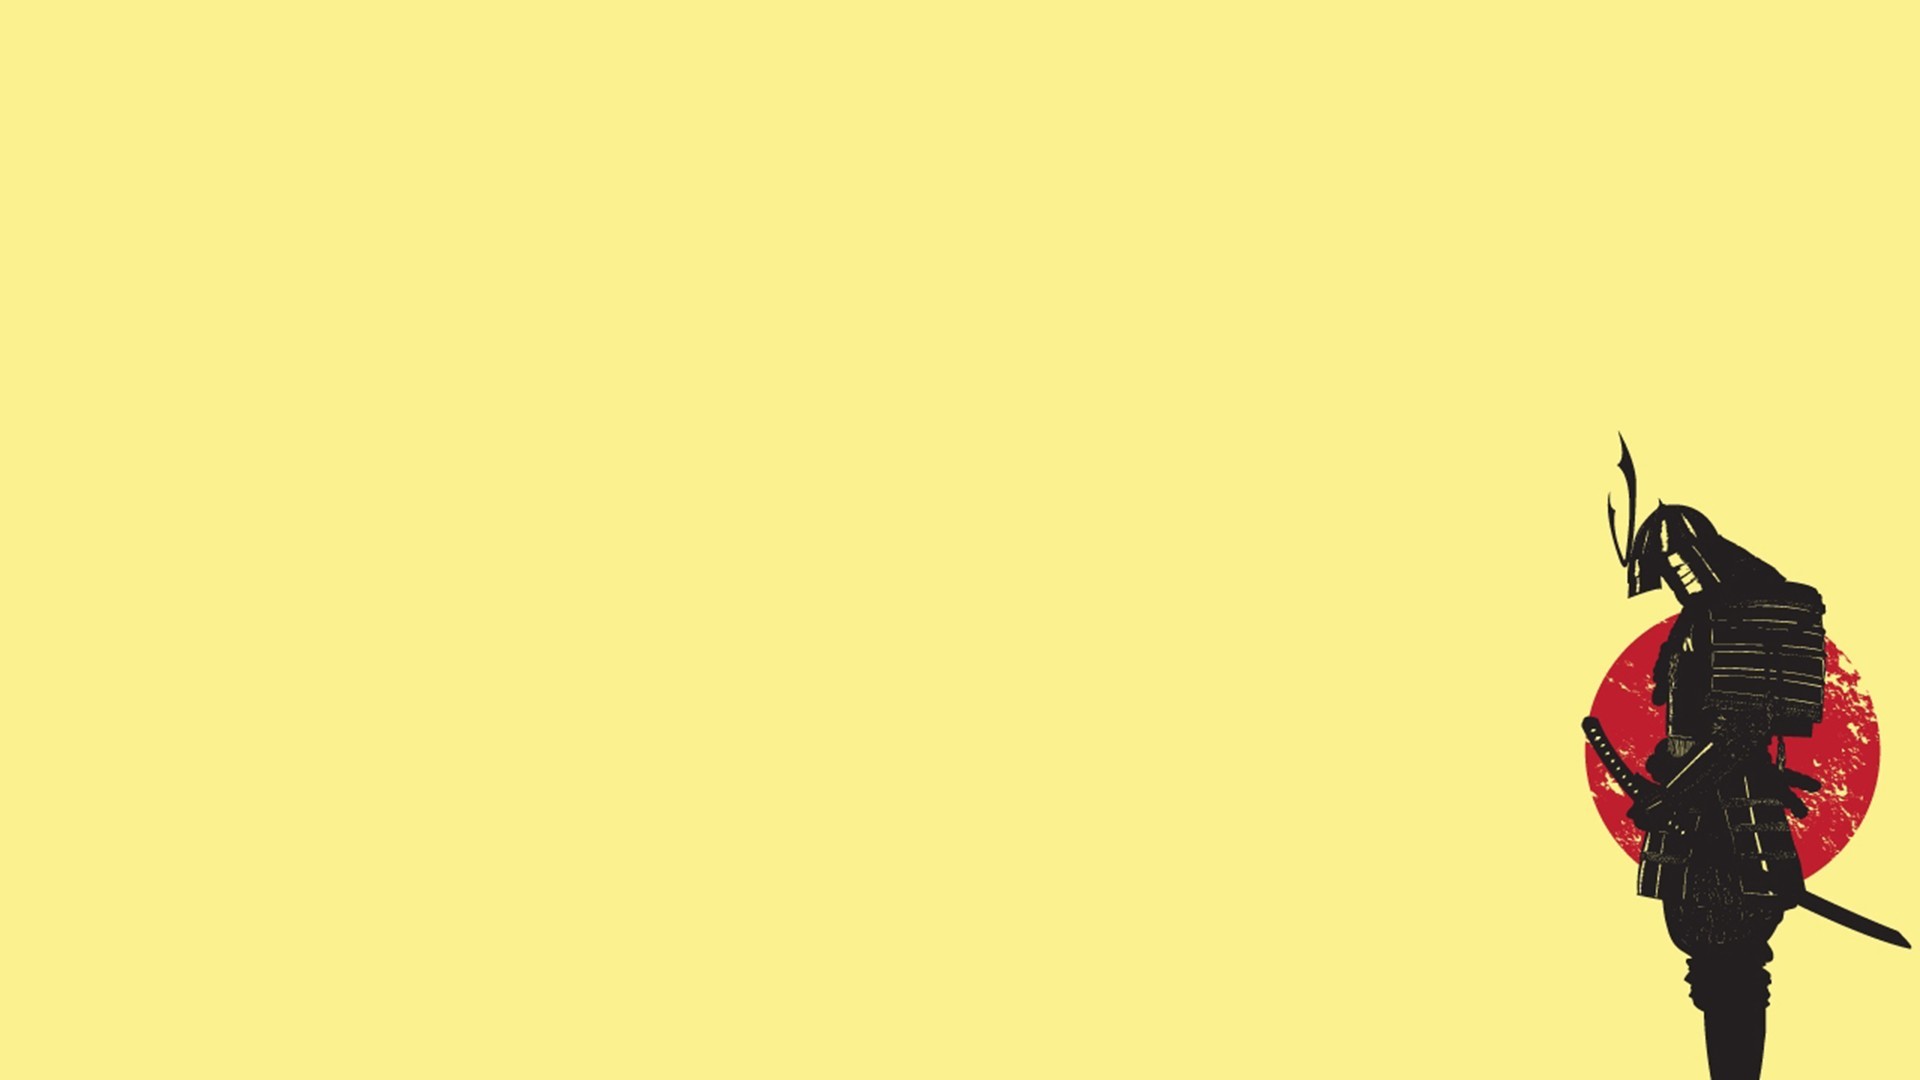 General 1920x1080 minimalism samurai warrior simple background yellow background yellow